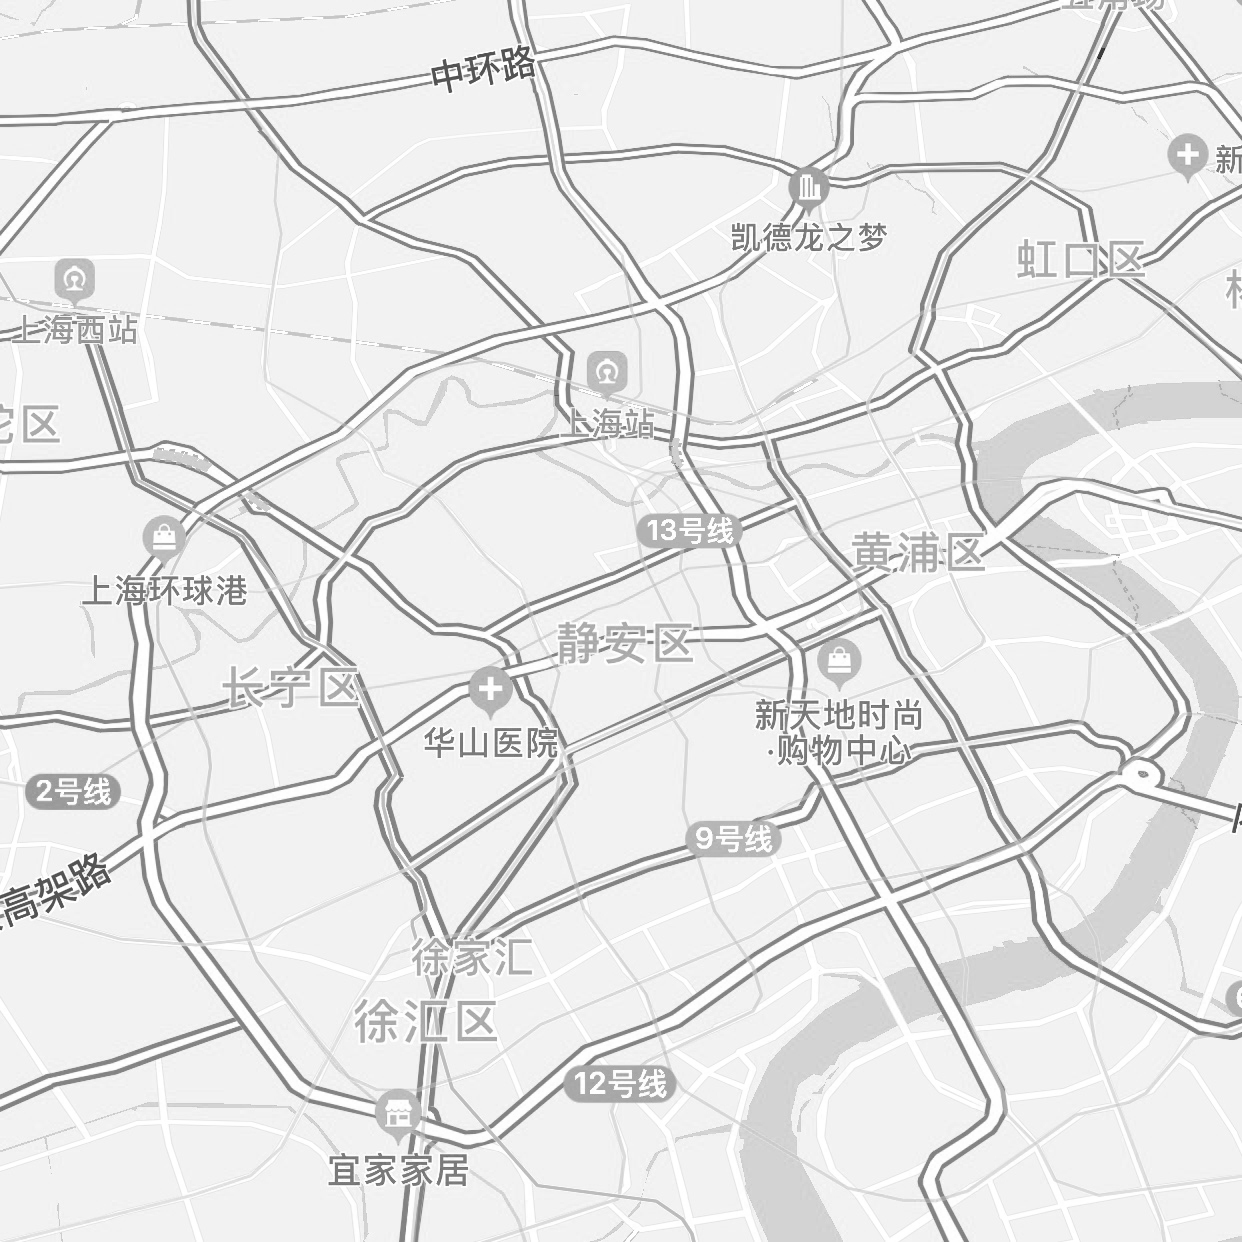 Shanghai Surveillance Camera Map (Source: GaoDe Map)